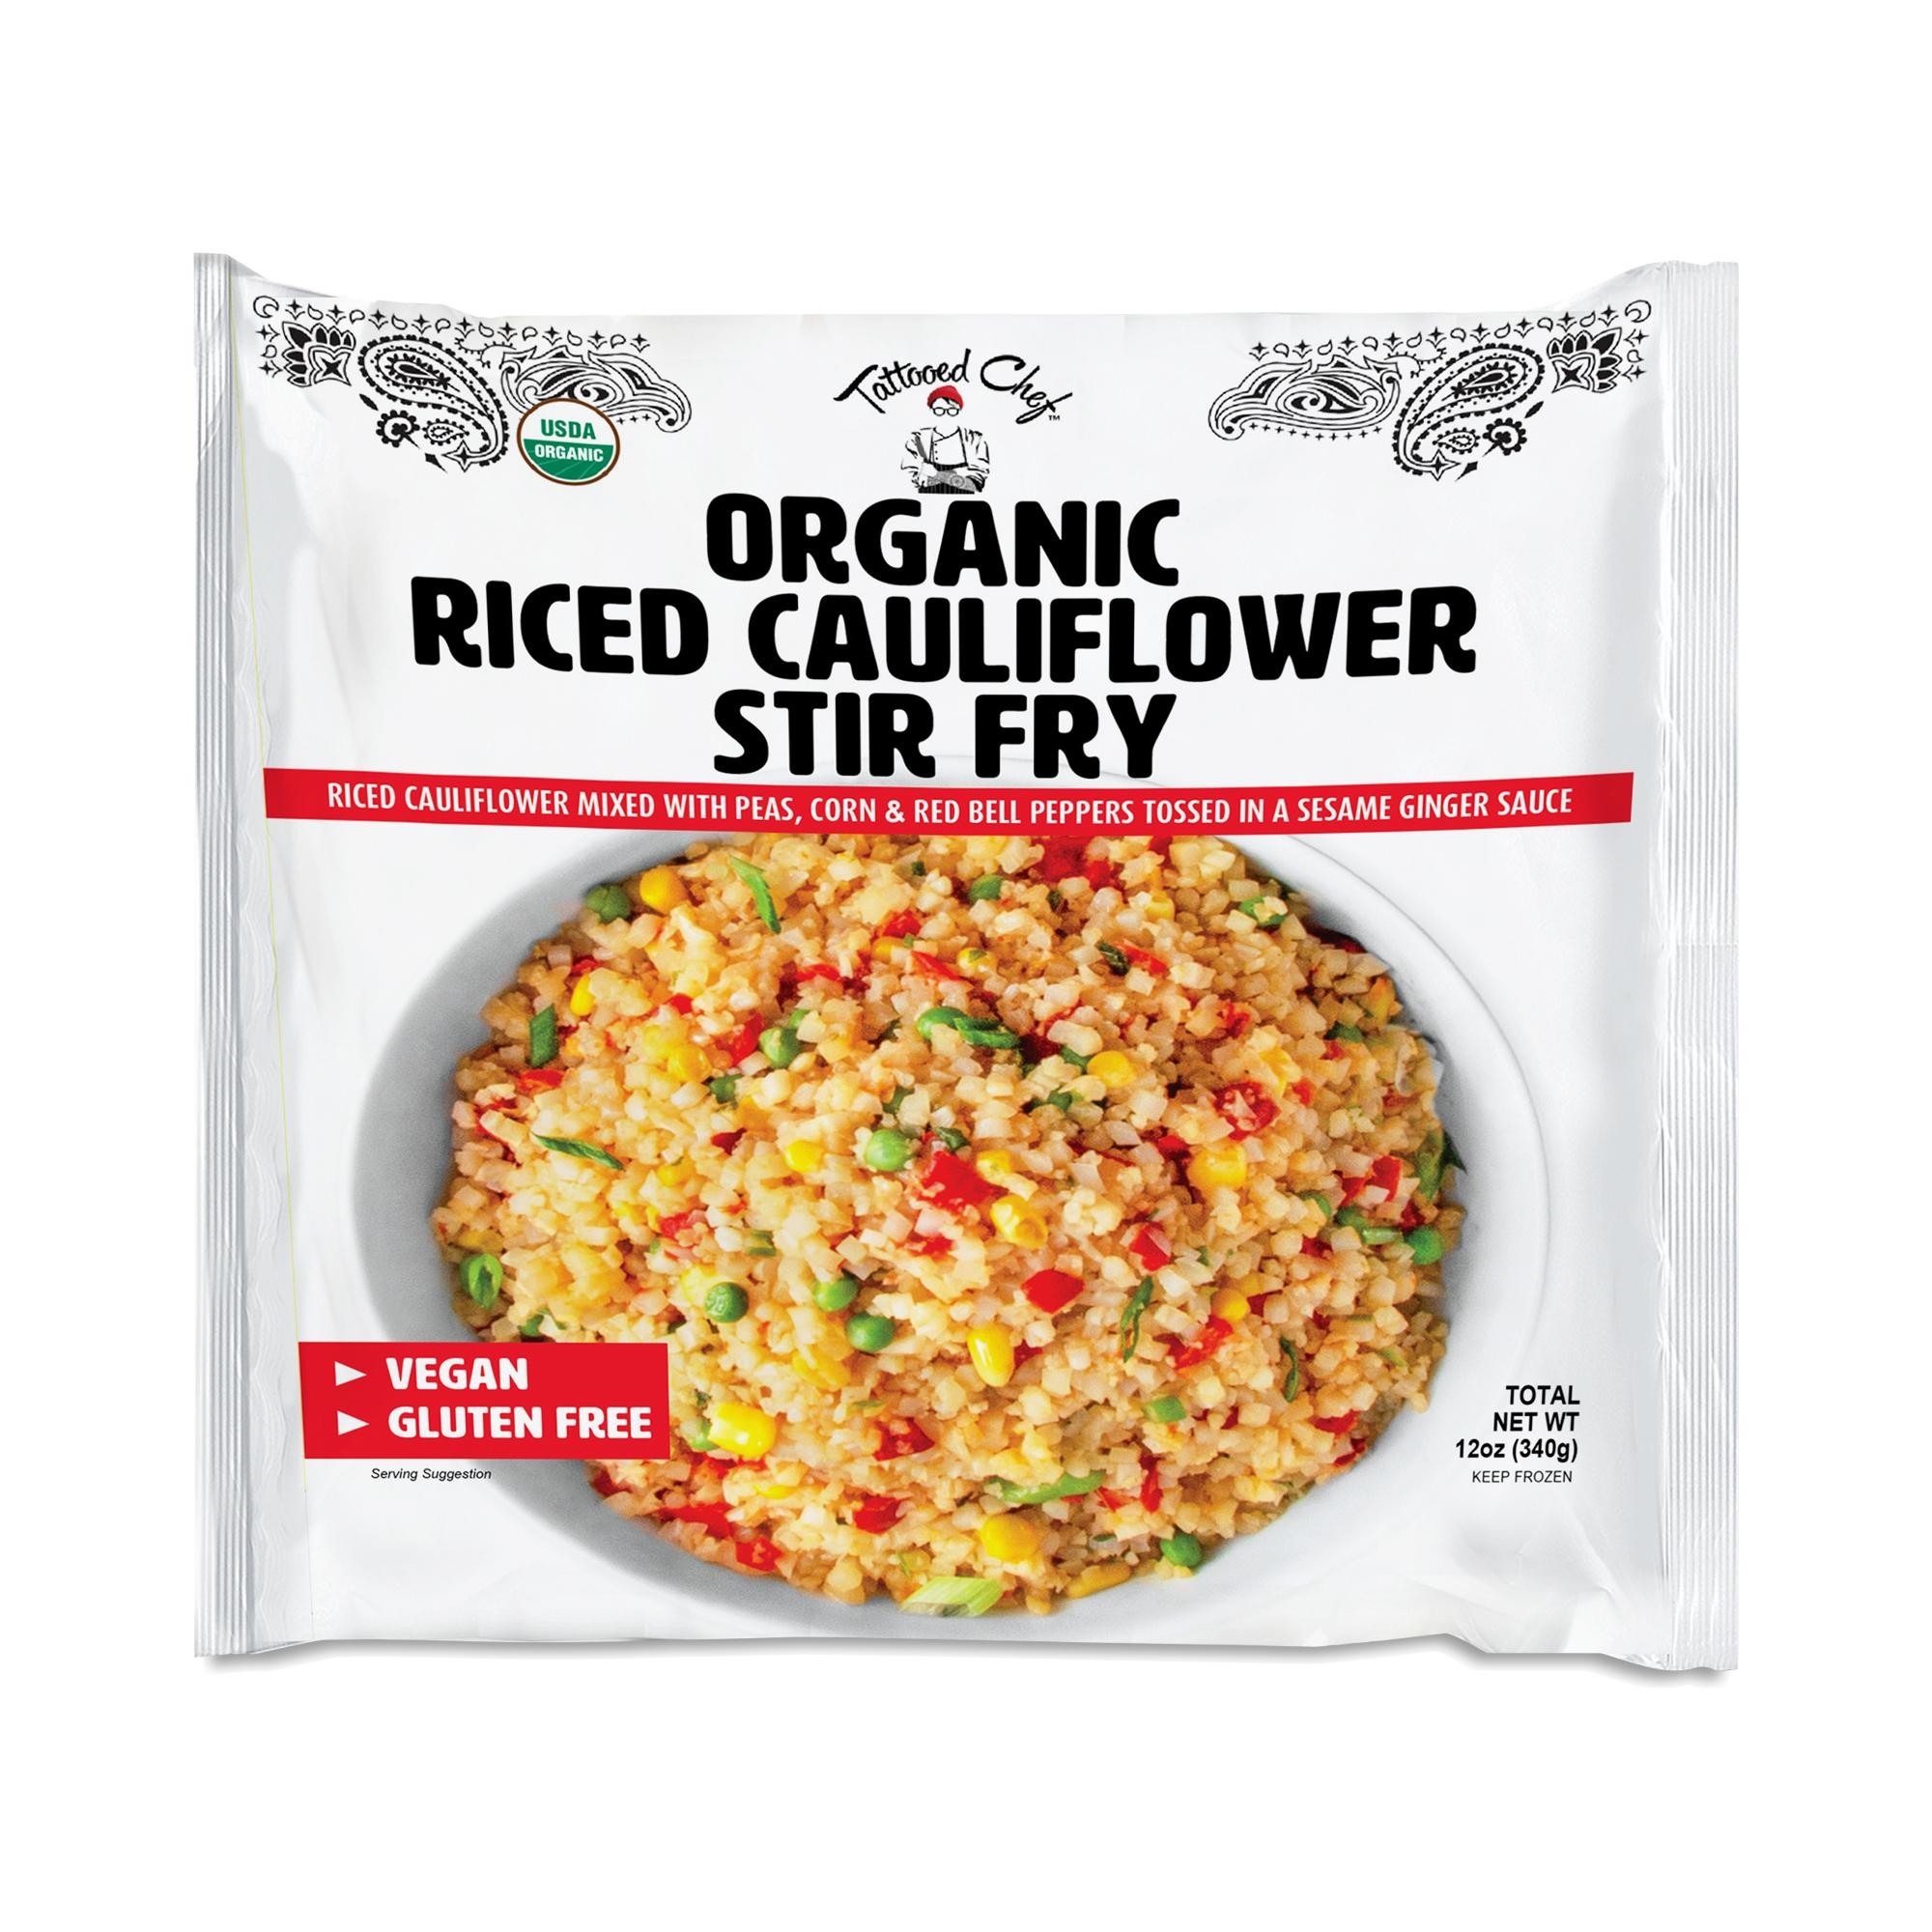 Tattooed Chef Organic Riced Cauliflower Stir Fry Gluten Free Vegan - 12 oz